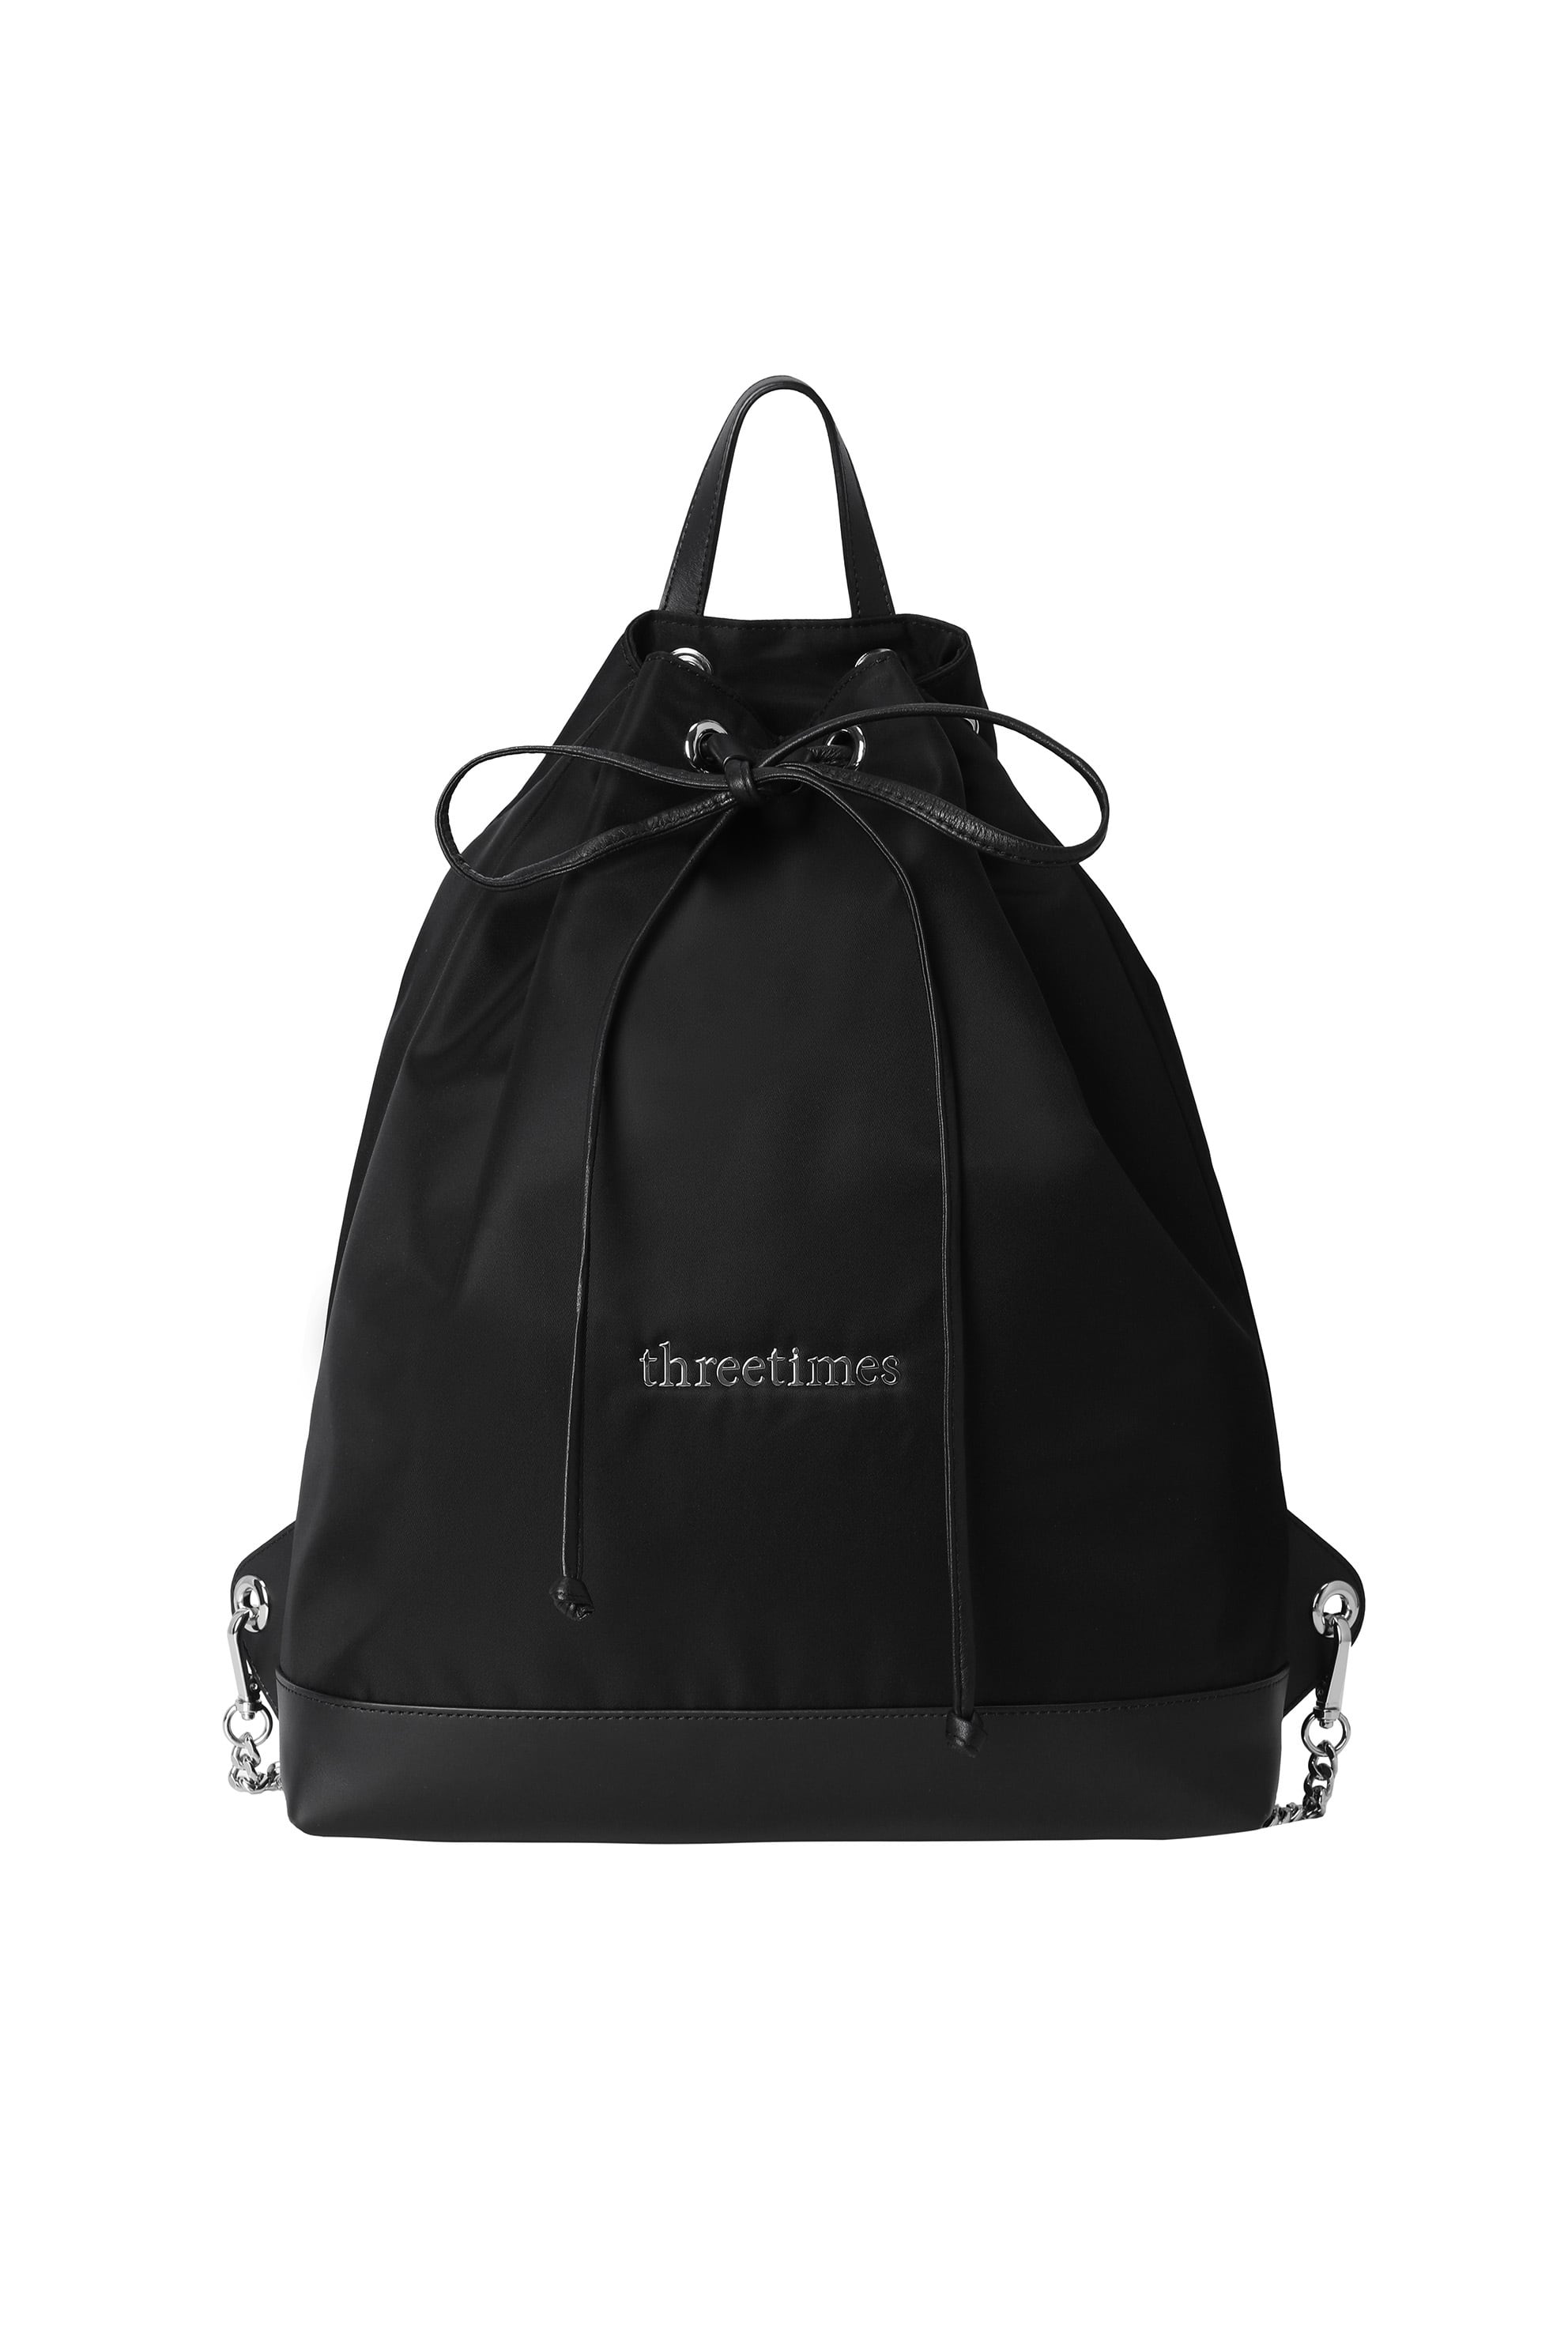 threetimes Classic tie backpack 正規品 韓国ブランド 韓国通販 韓国